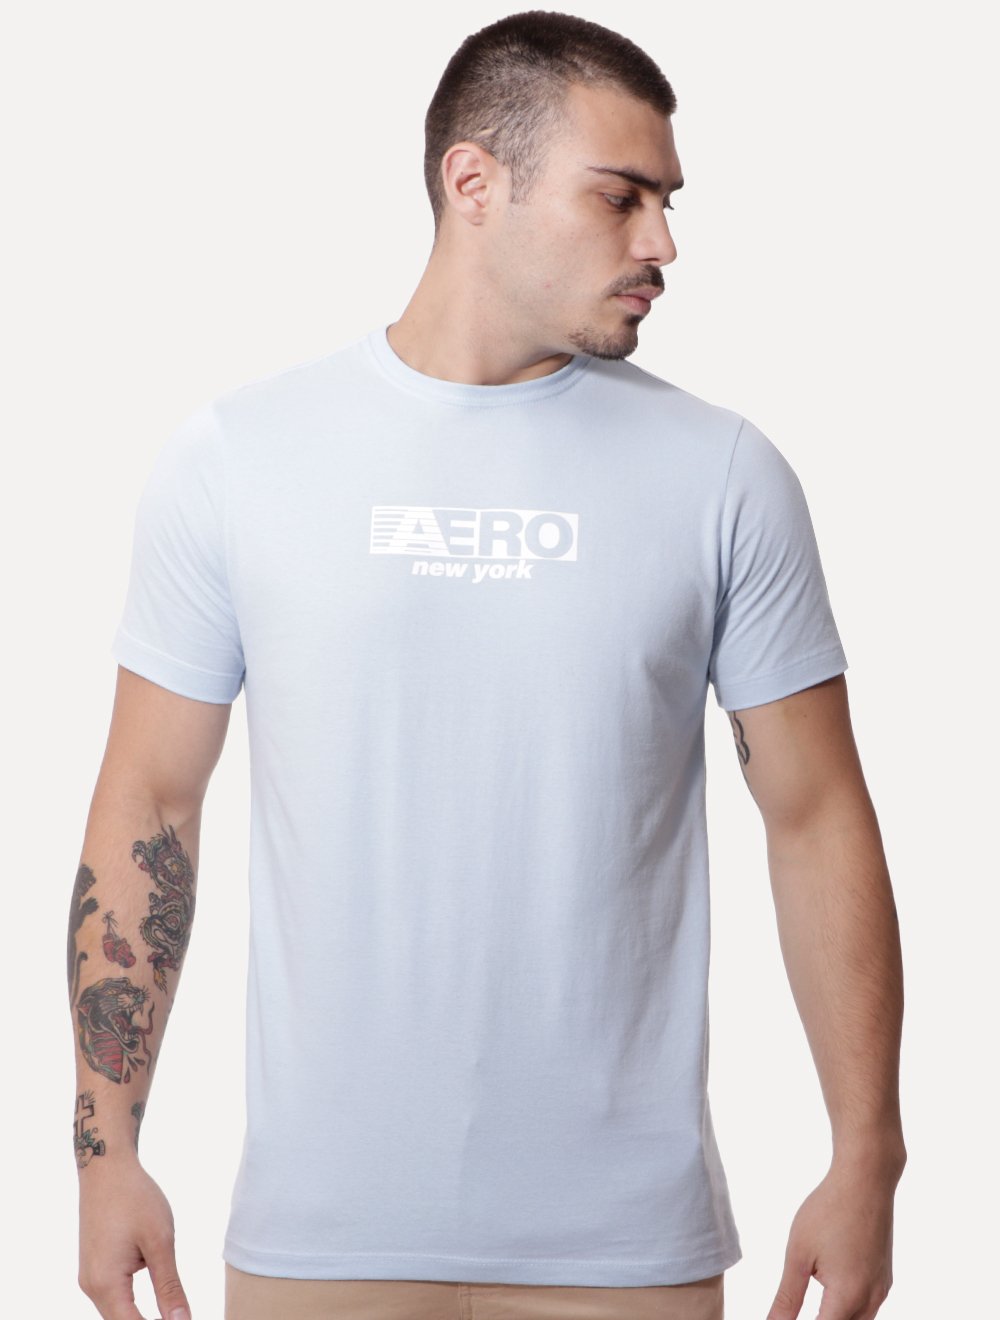 Camiseta Aeropostale Original Brand - Alcateia Moda Masculina